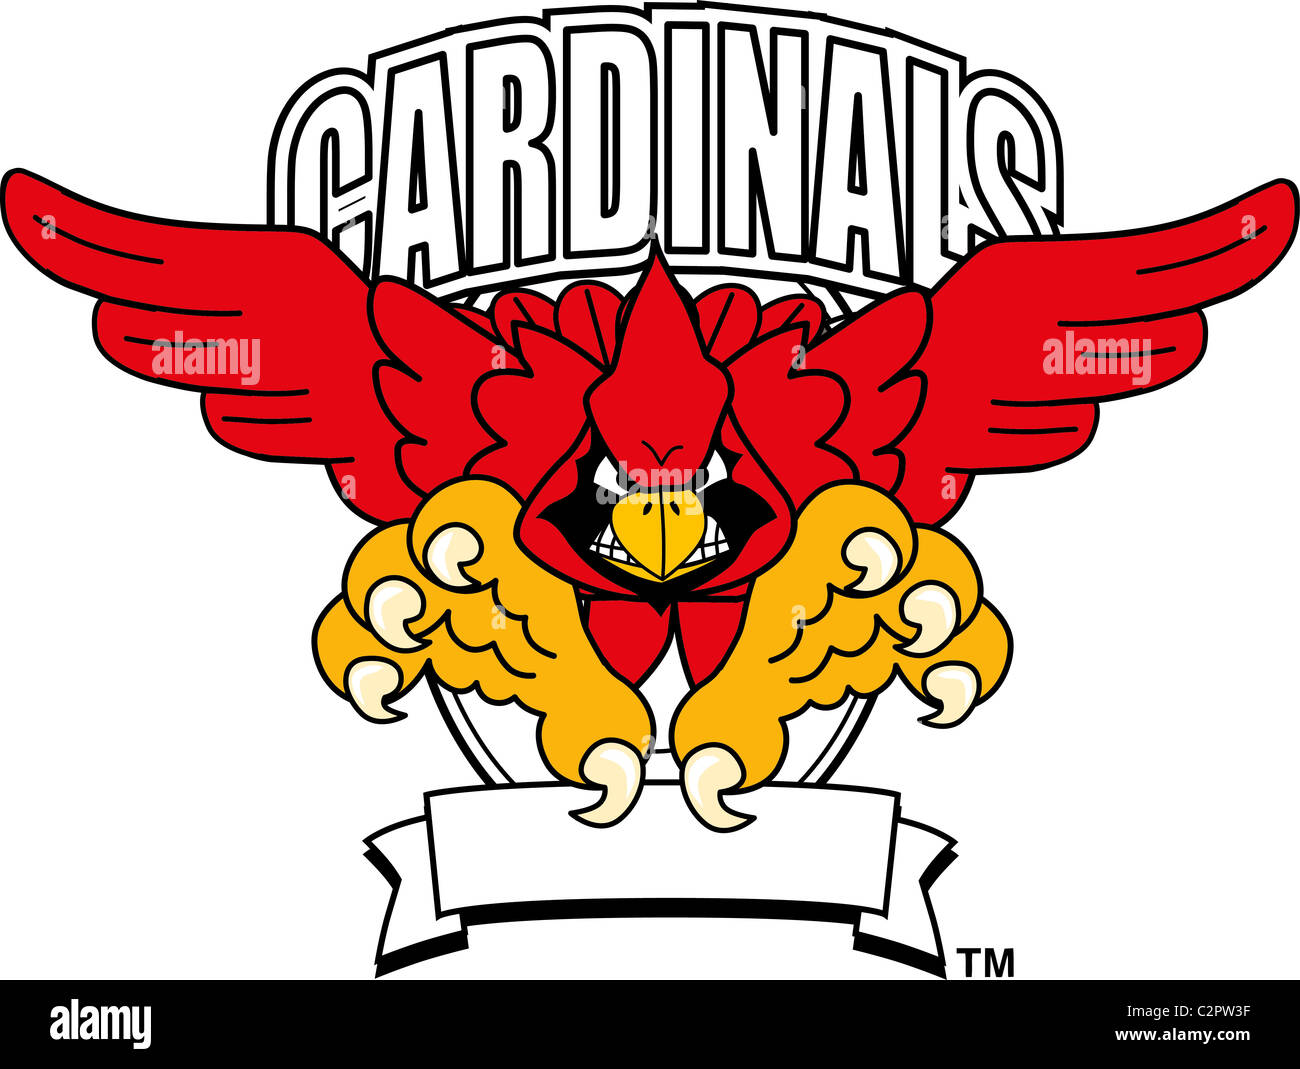 Cartoon Cardinal School Mascot Logo Template Stock Photo